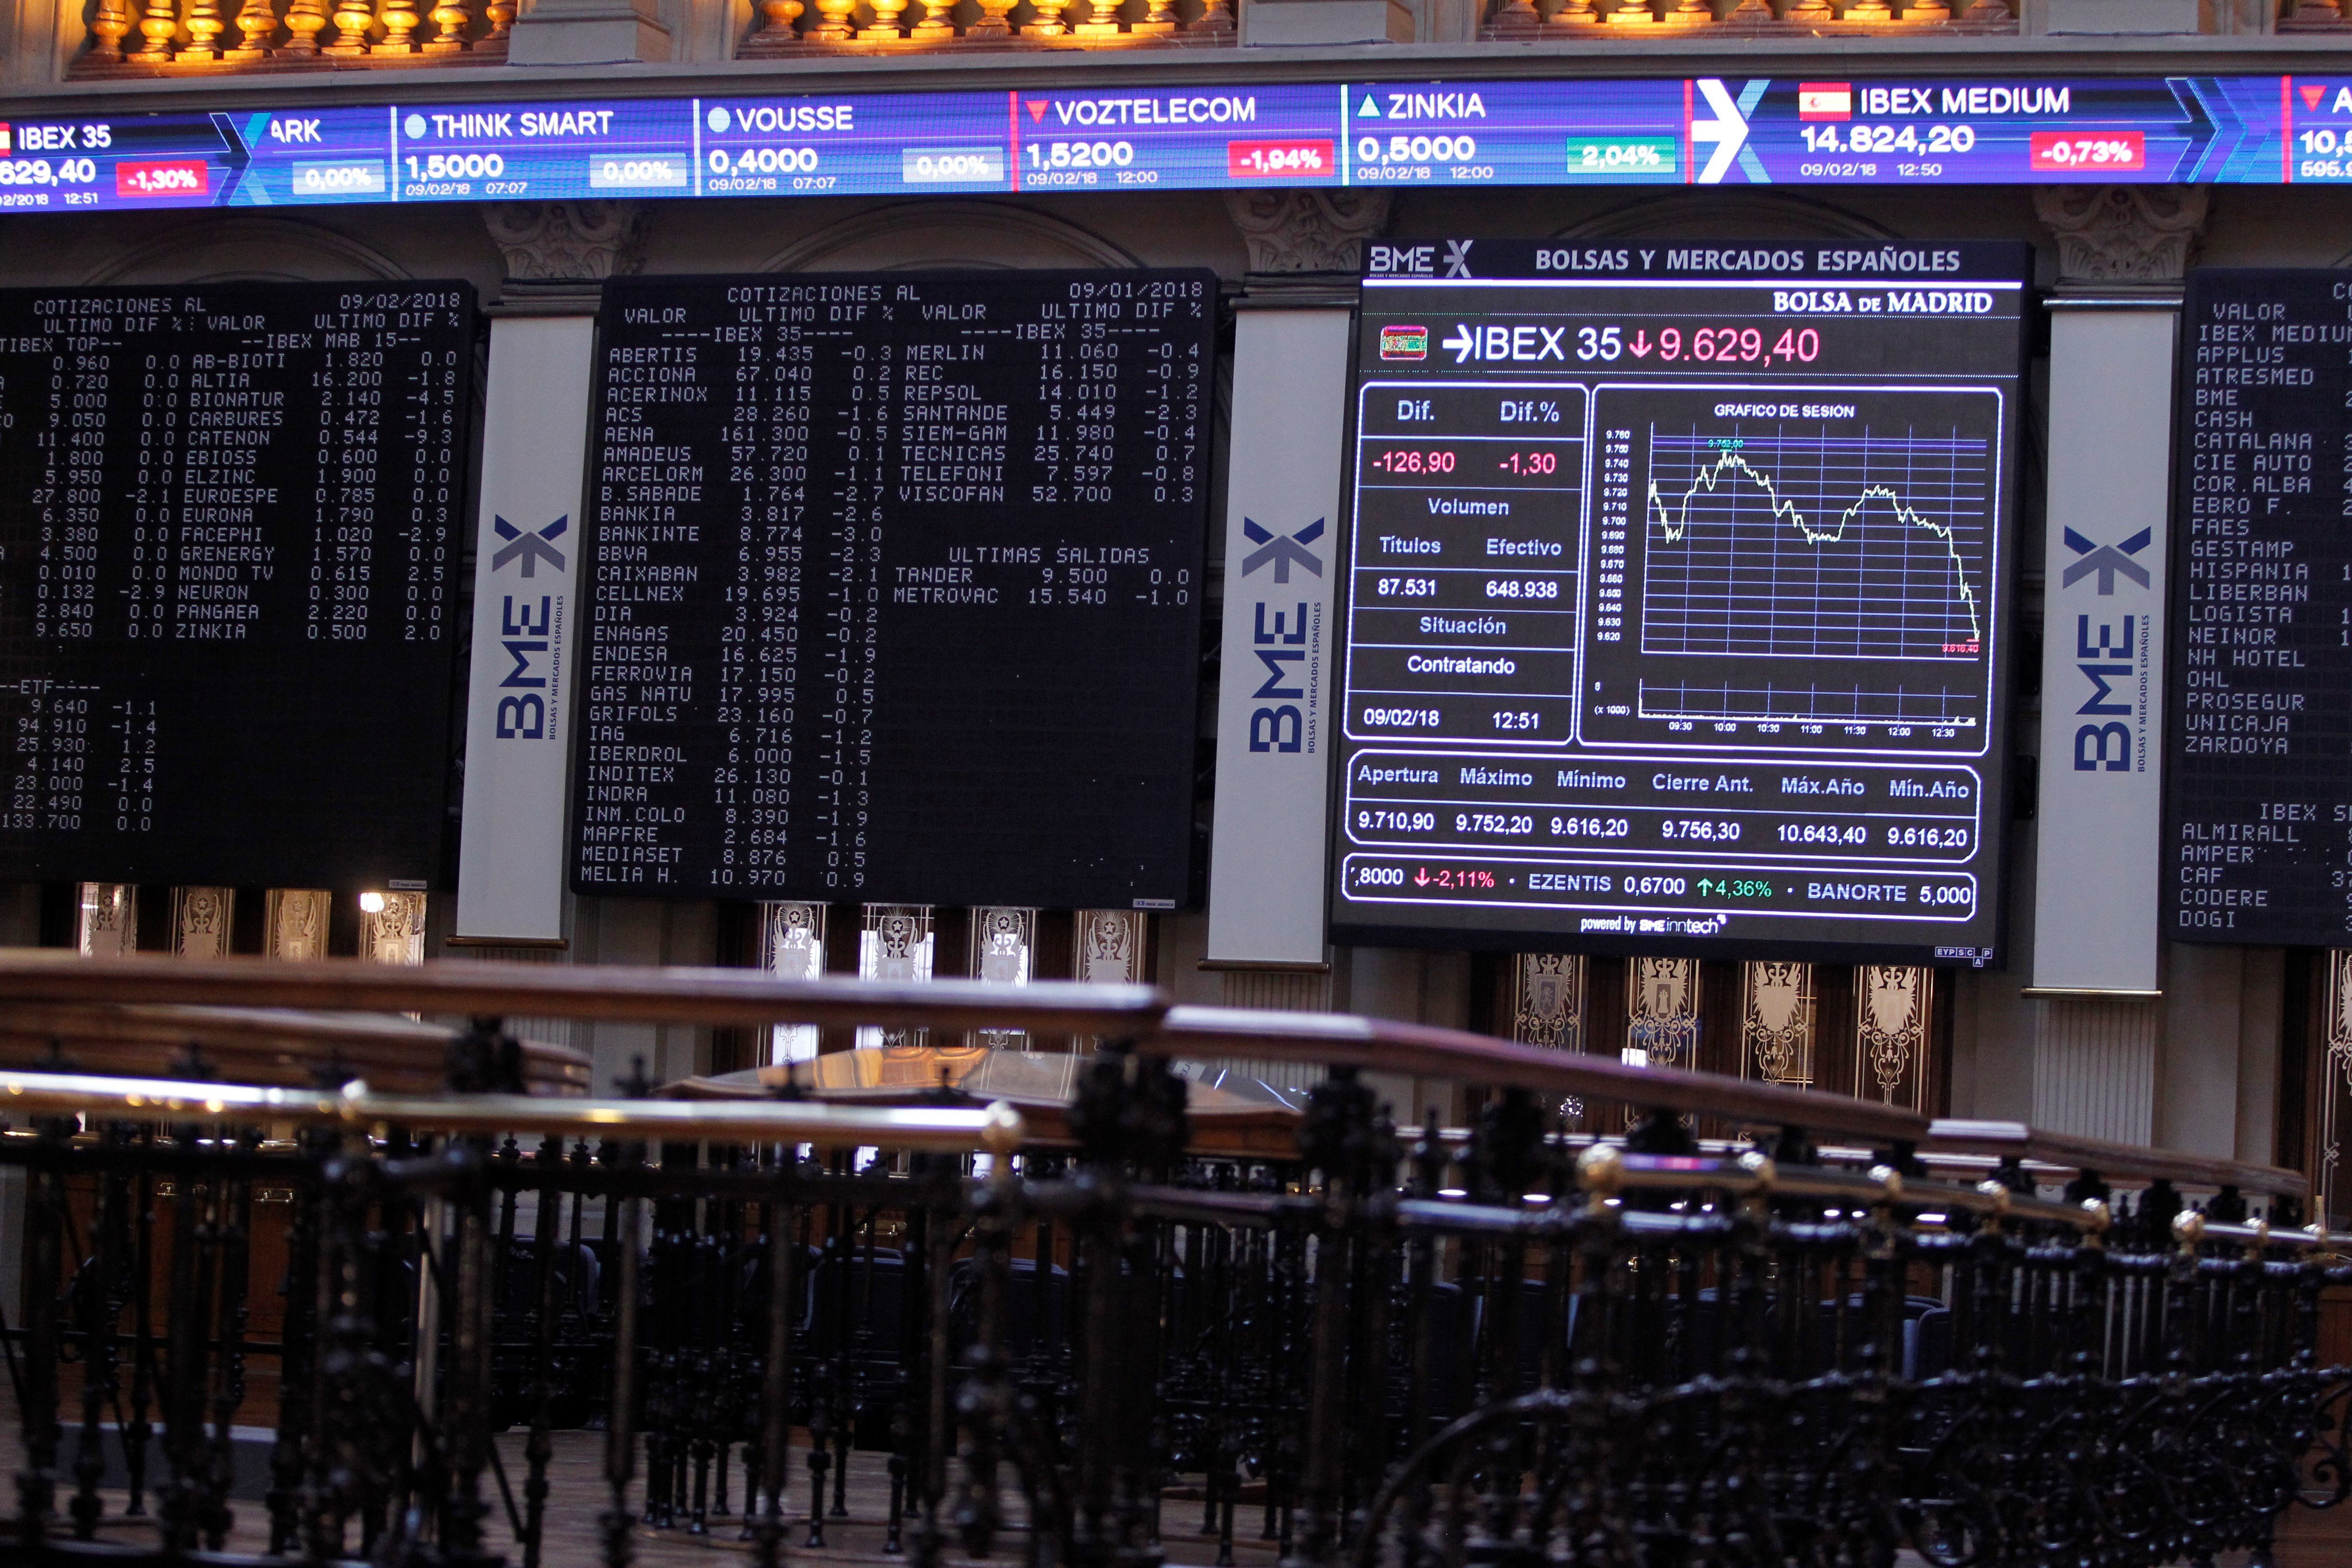 Uncertainty in Spanish politics keeps Ibex stock index down